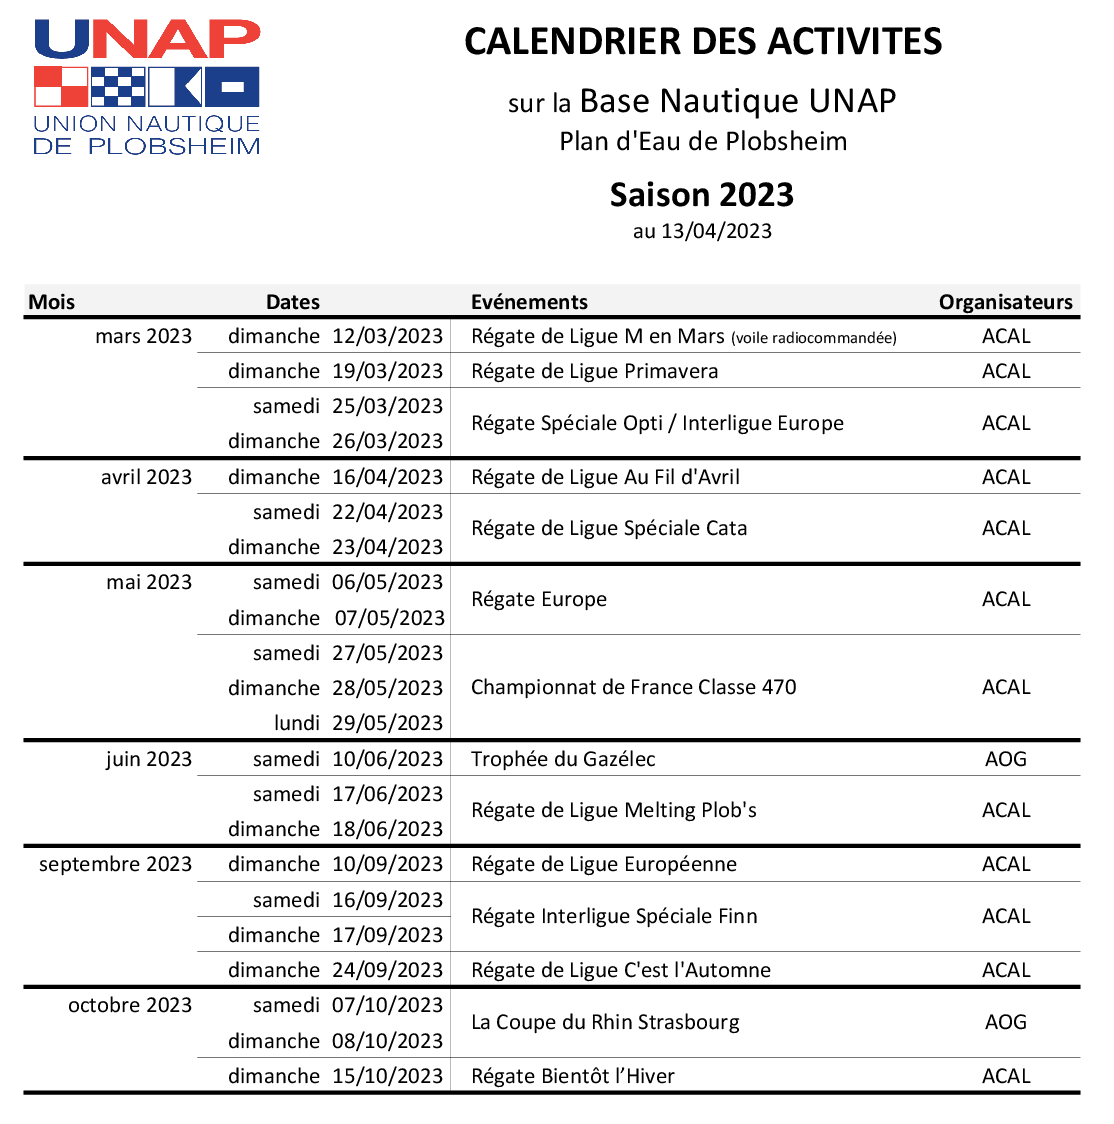 Calendrier activités Base UNAP 2023.png